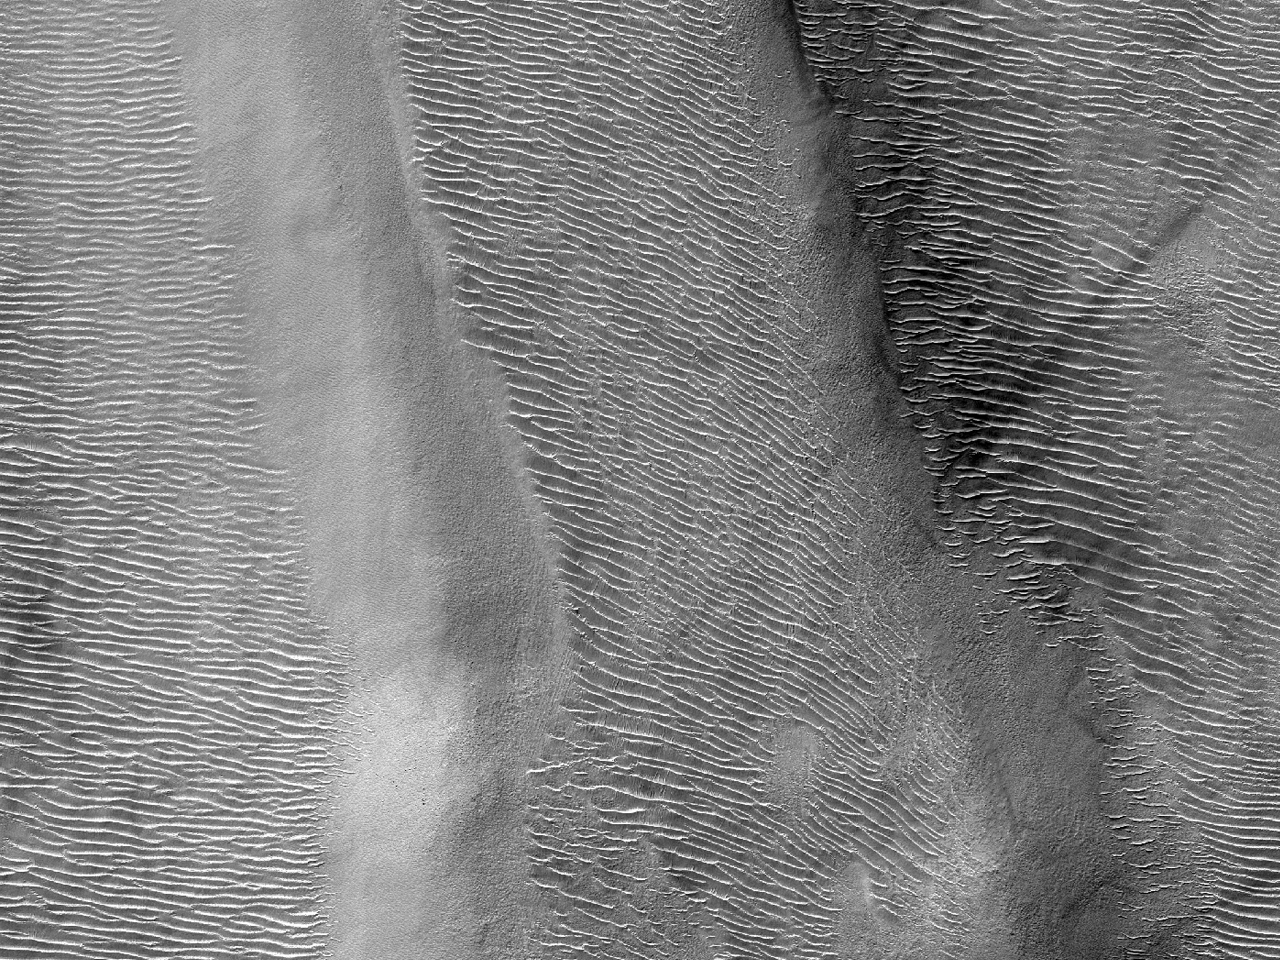 Stromlinienfrmige Merkmale in Argyre Planitia